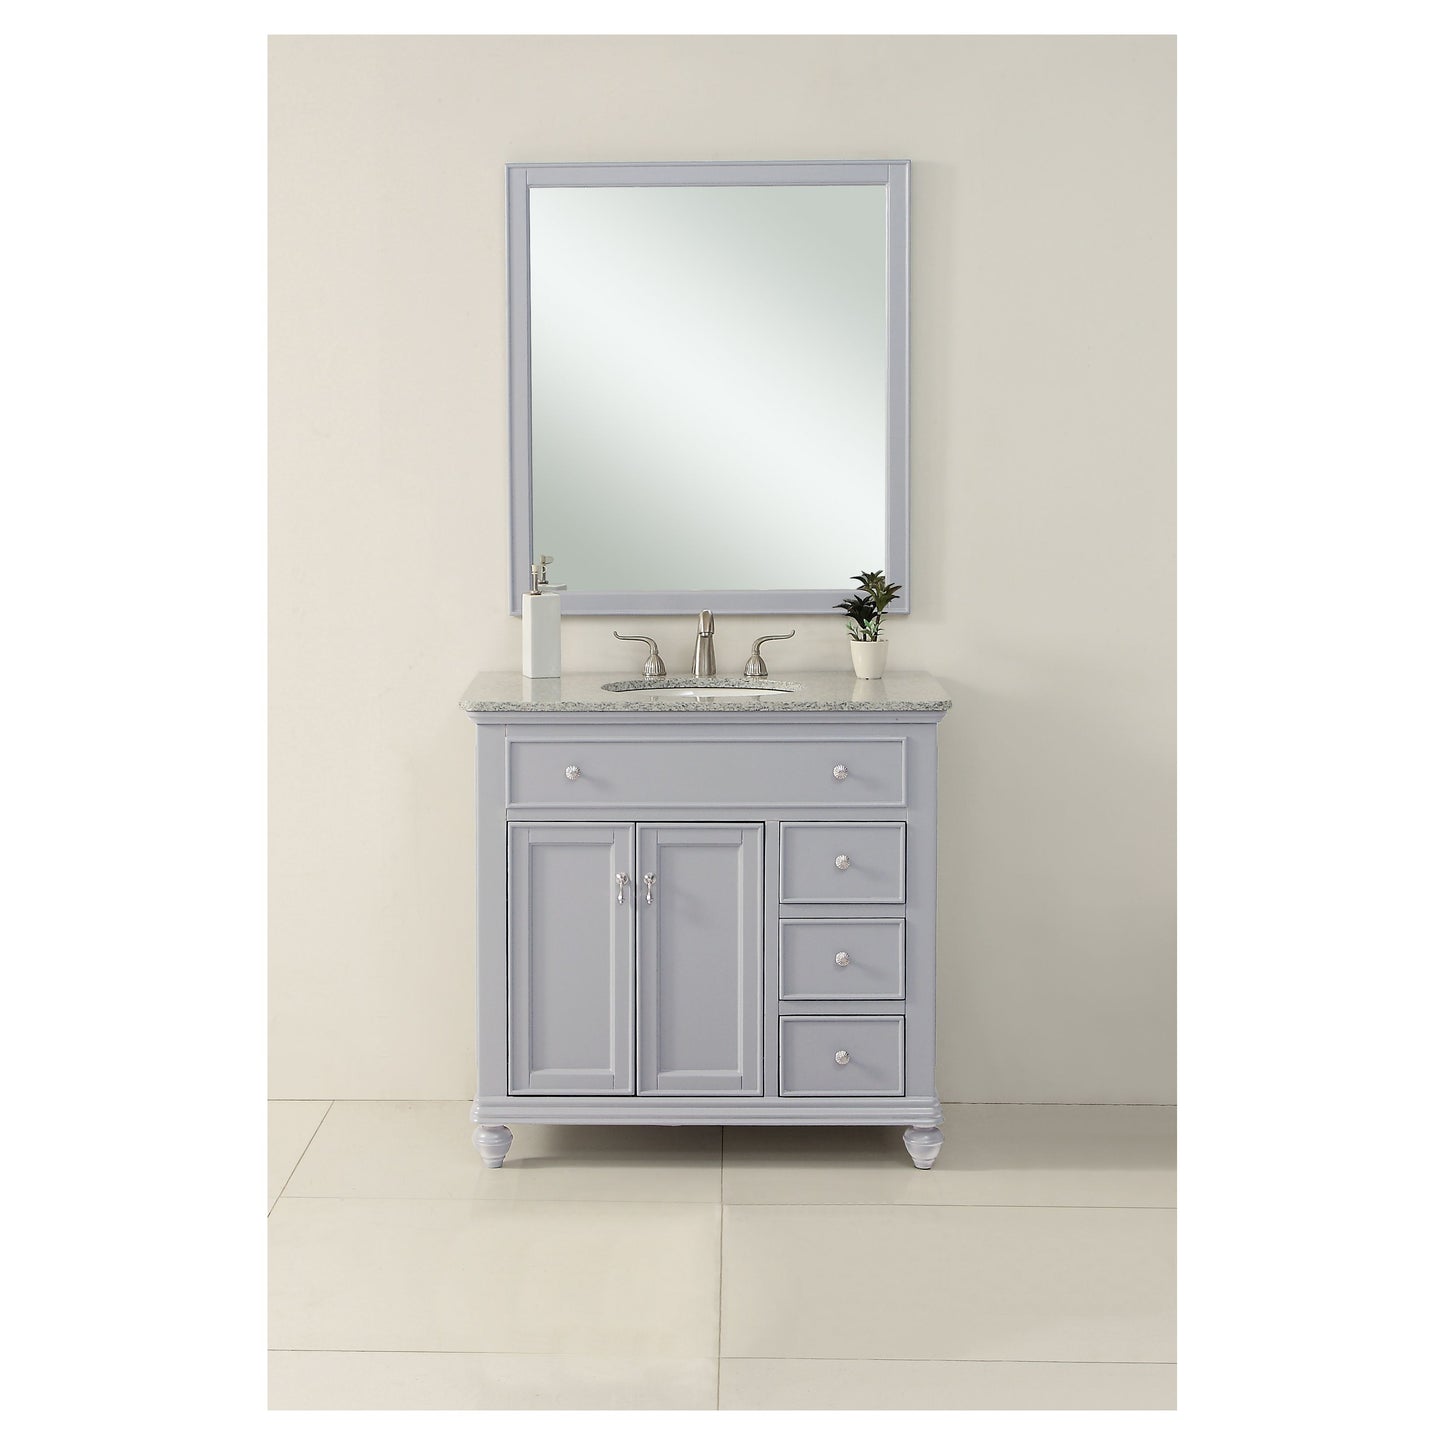 VF12336GR 36" Single Bathroom Vanity Set in Light Grey